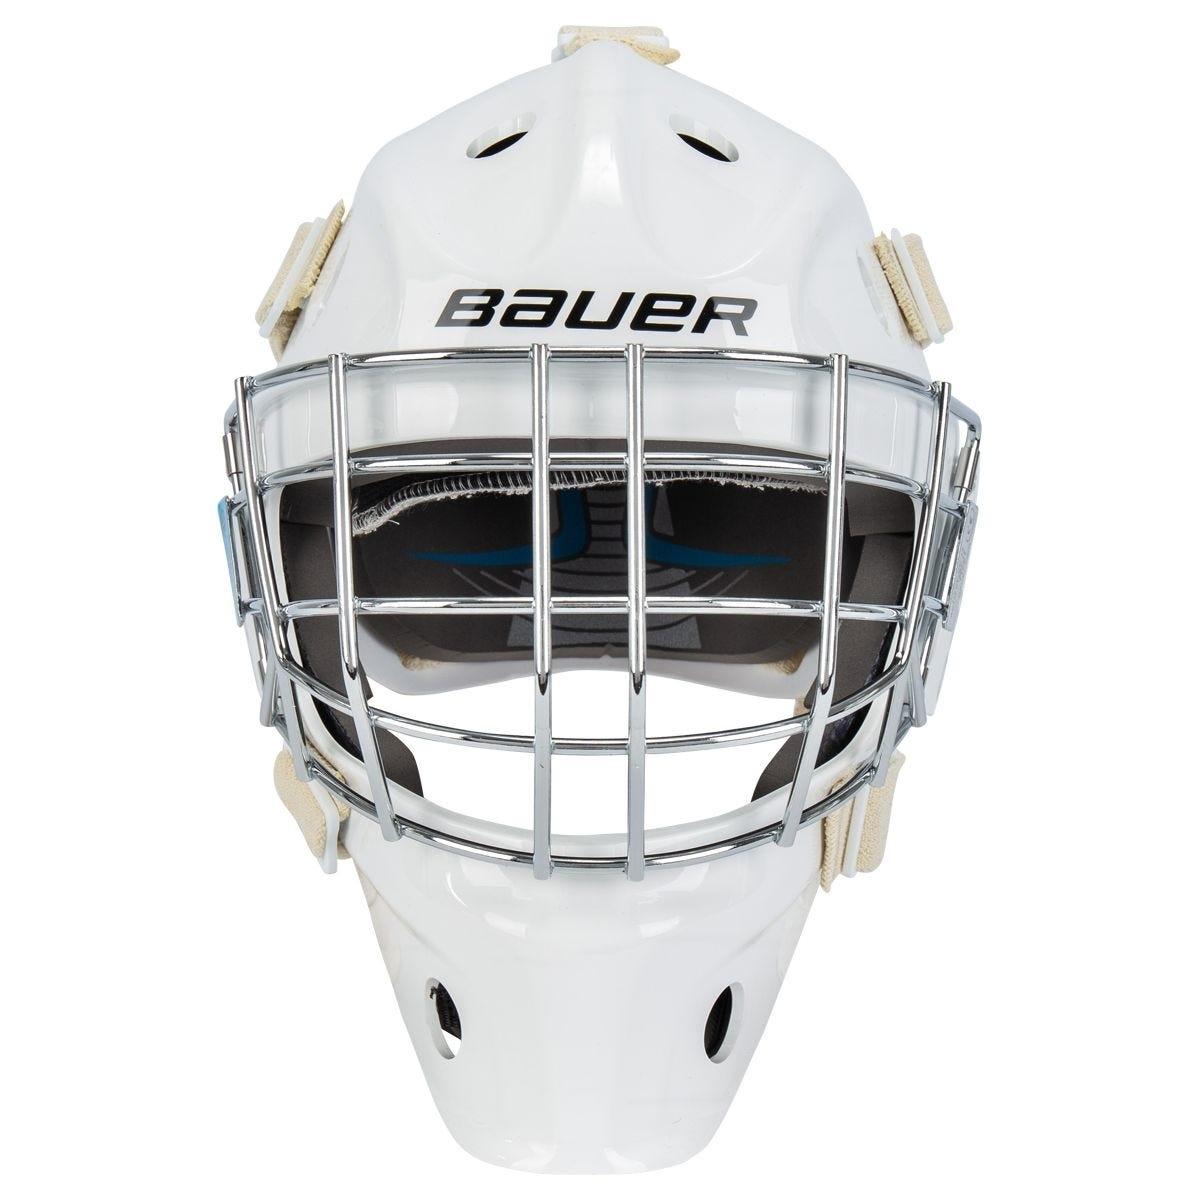 Bauer 930 Yth. Certified Goalie Maskproduct zoom image #3